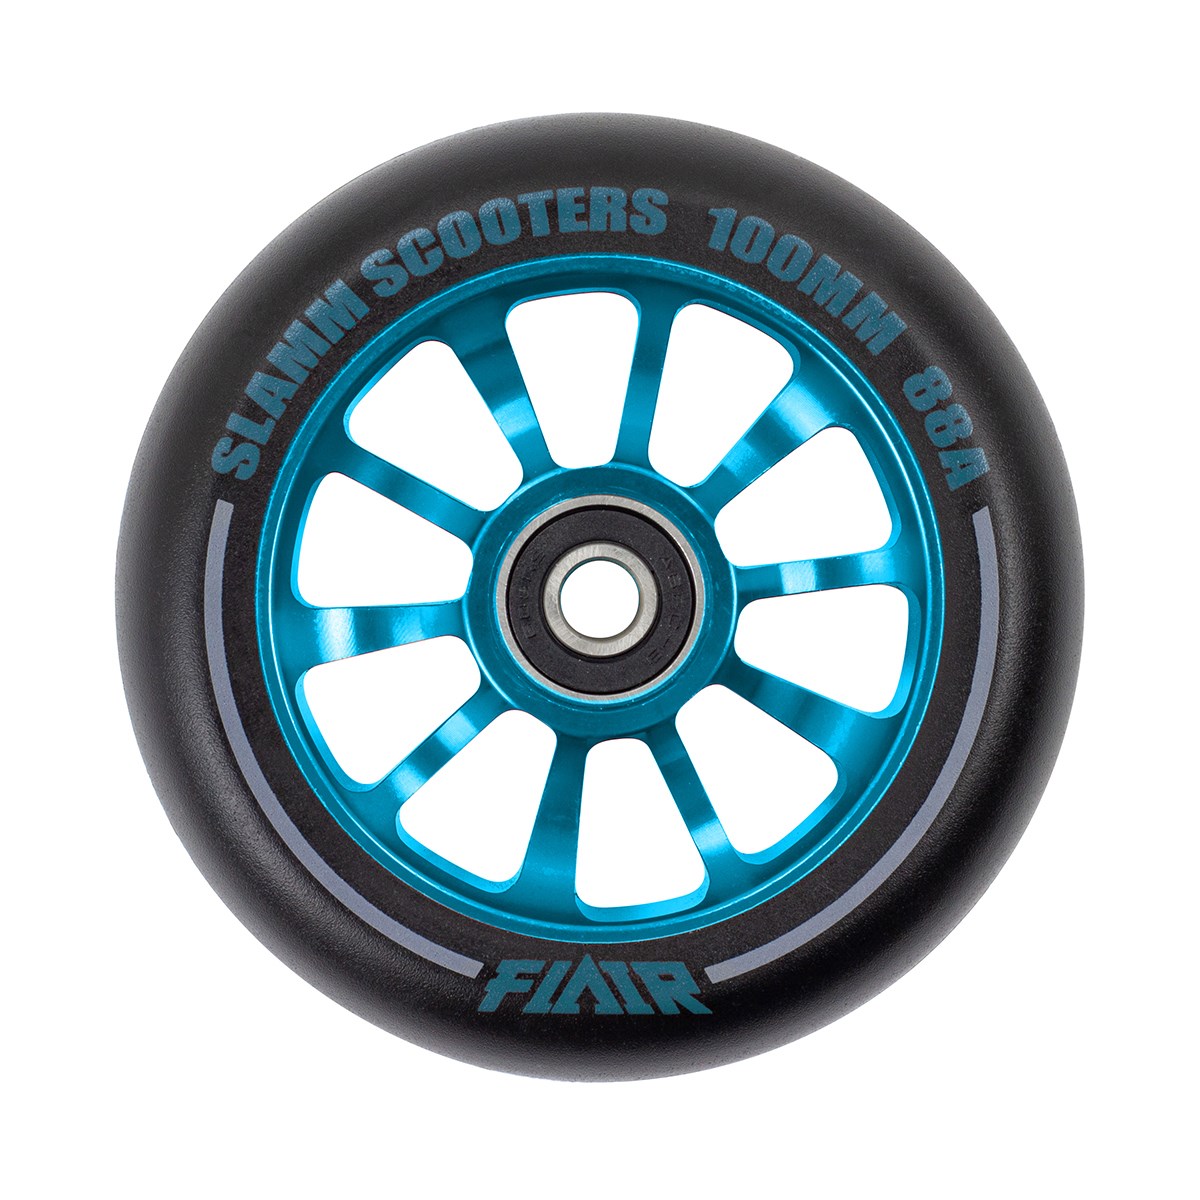 An image of Slamm 100mm Flair 2.0 Scooter Wheel - Blue